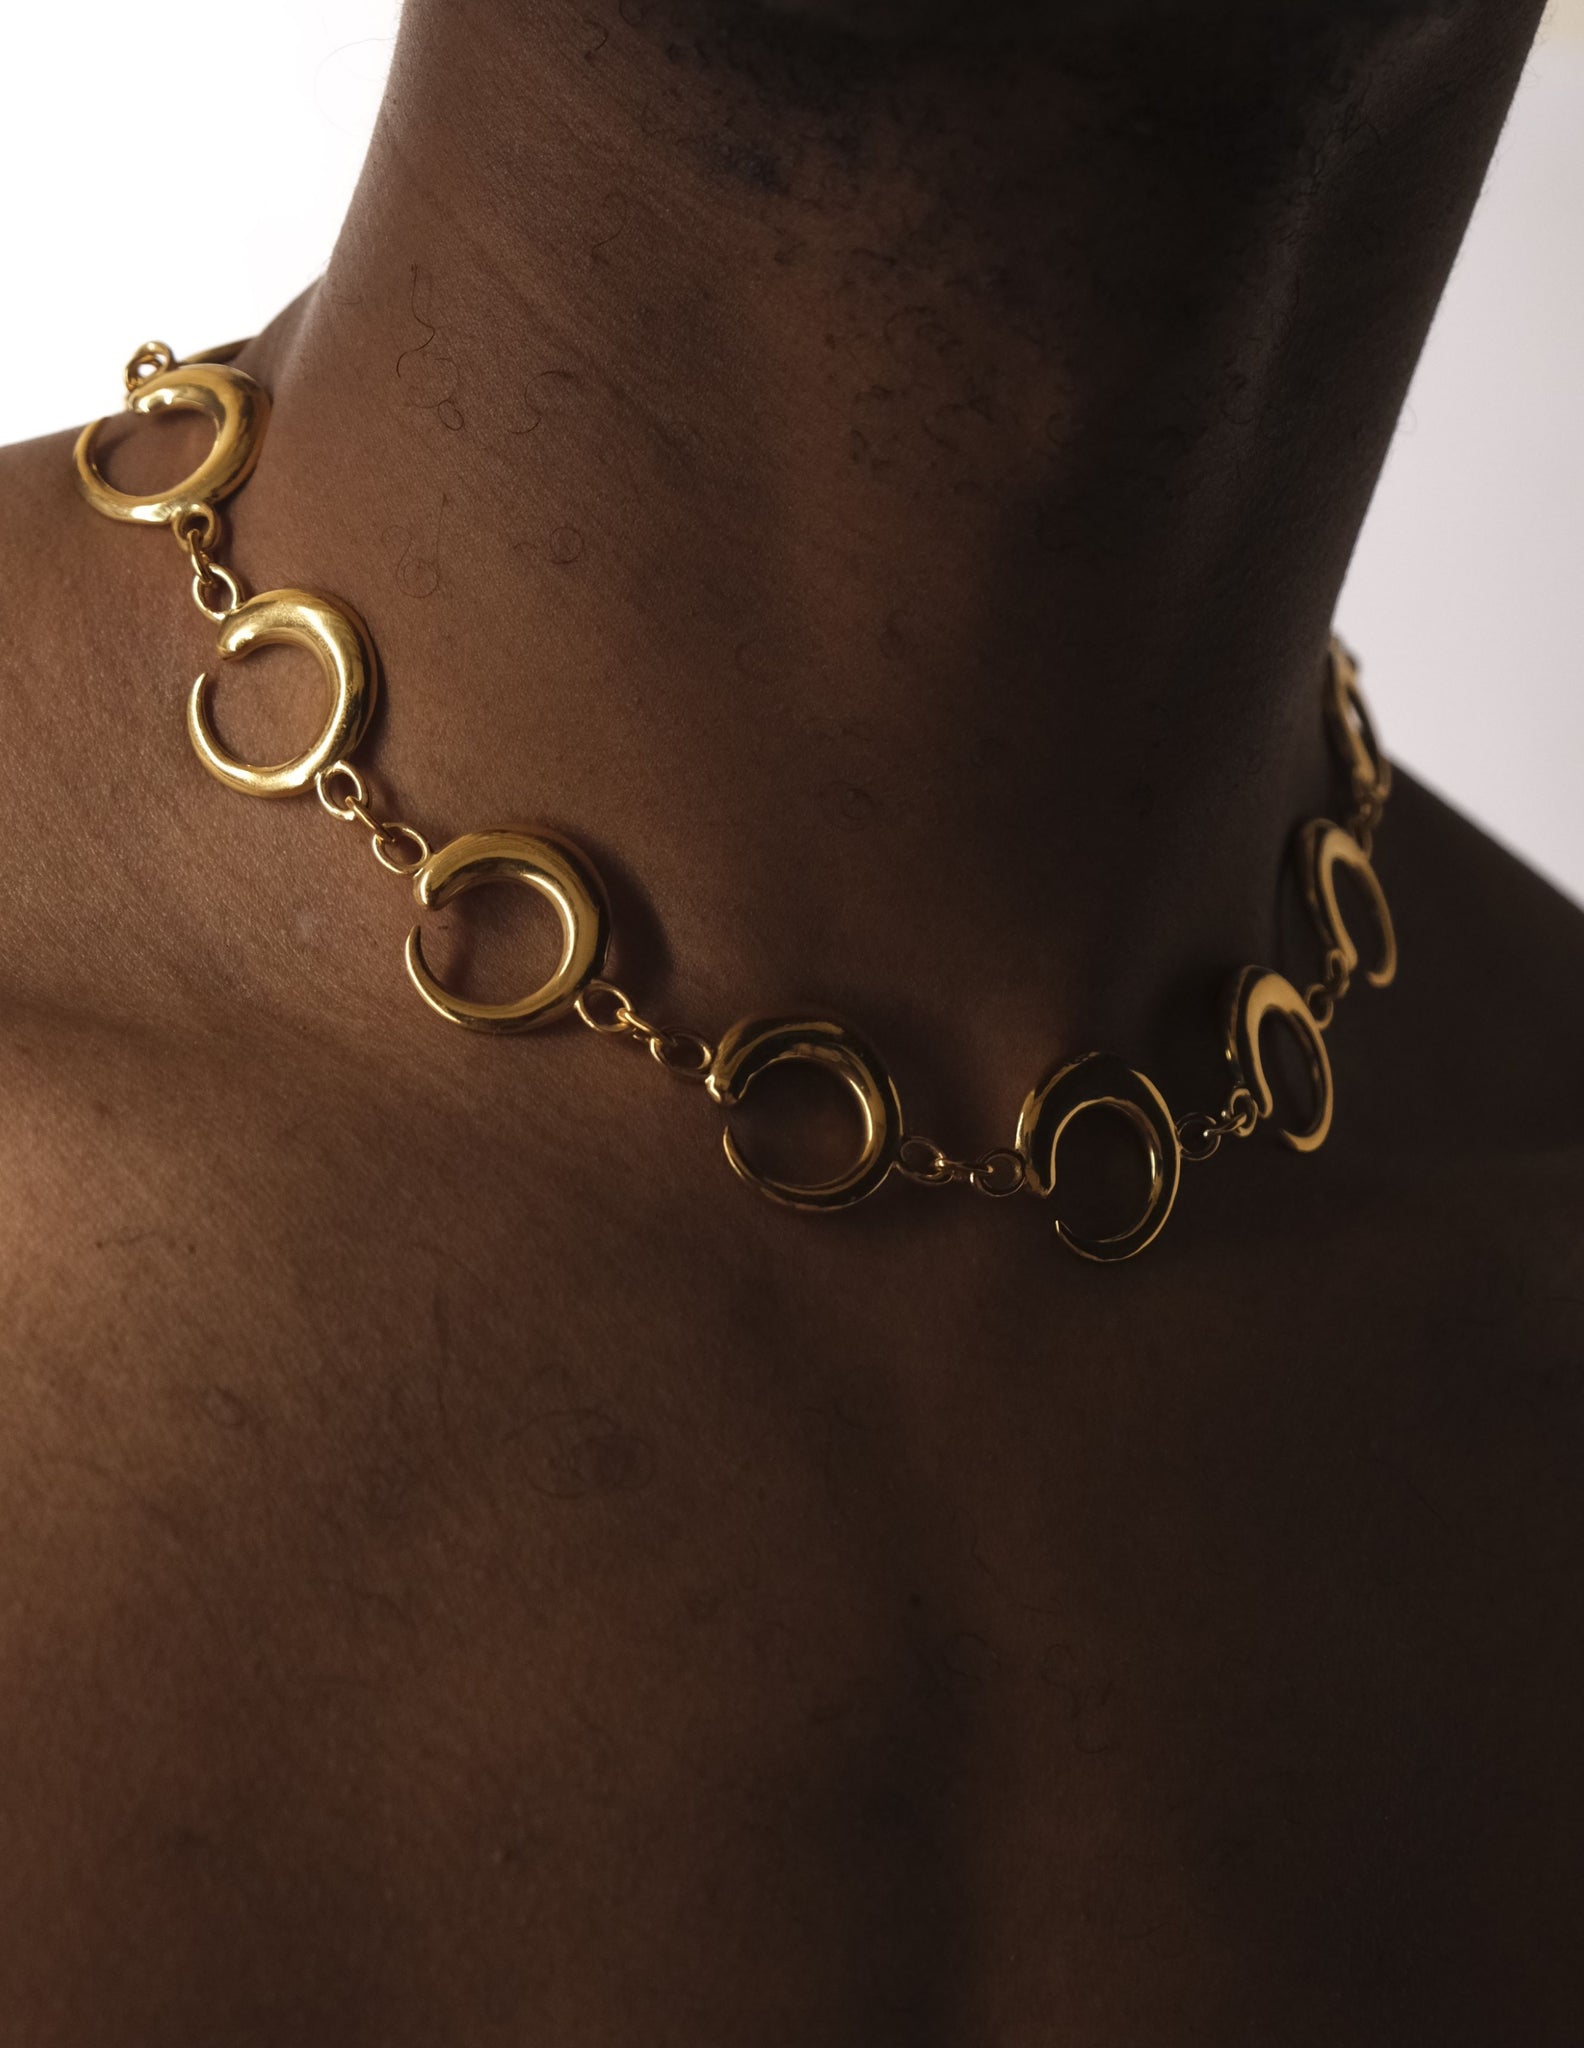 Khartoum Link Chain in Polished Gold Vermeil